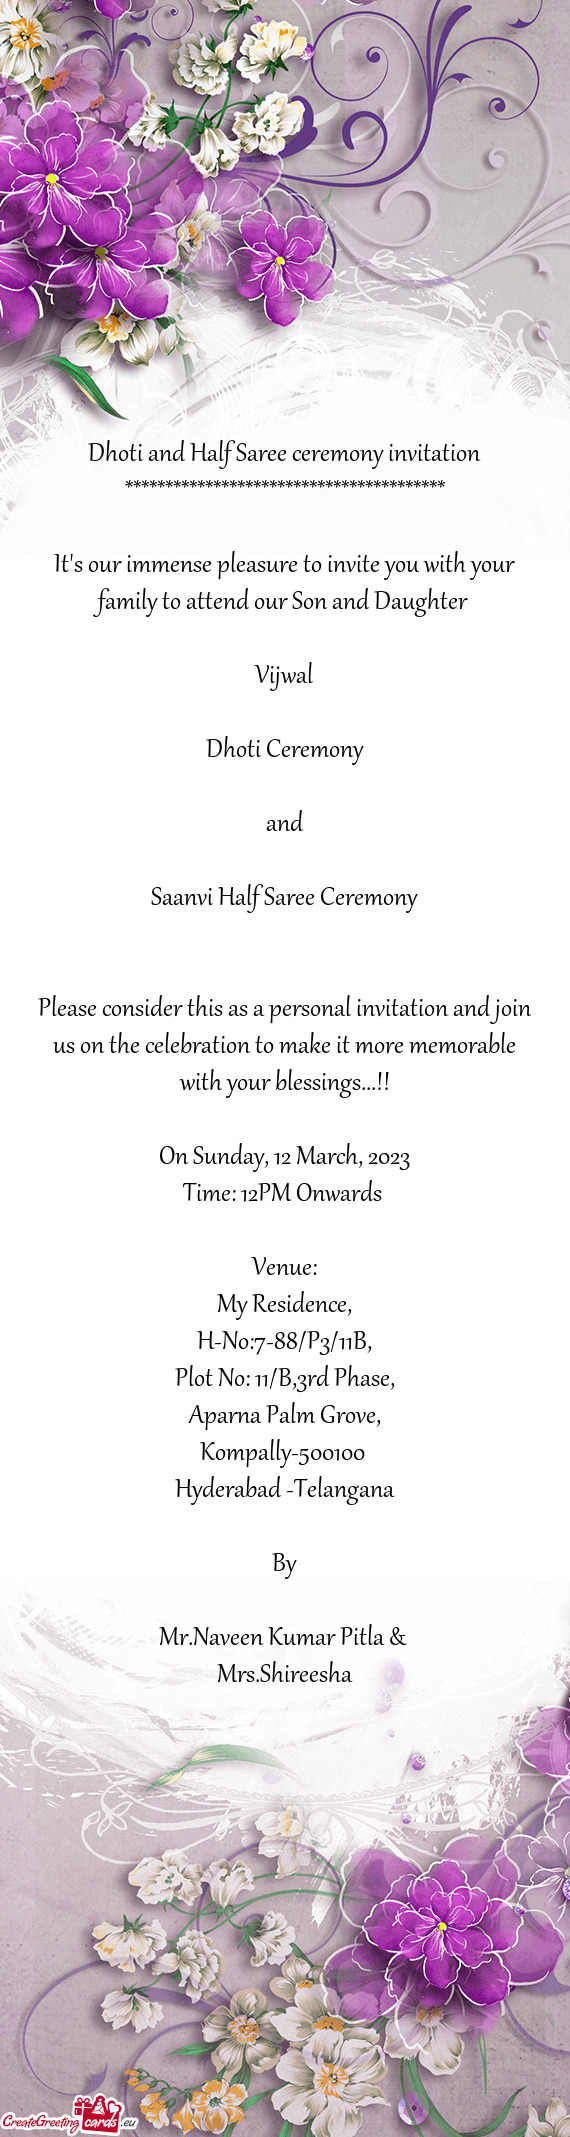 Saanvi Half Saree Ceremony